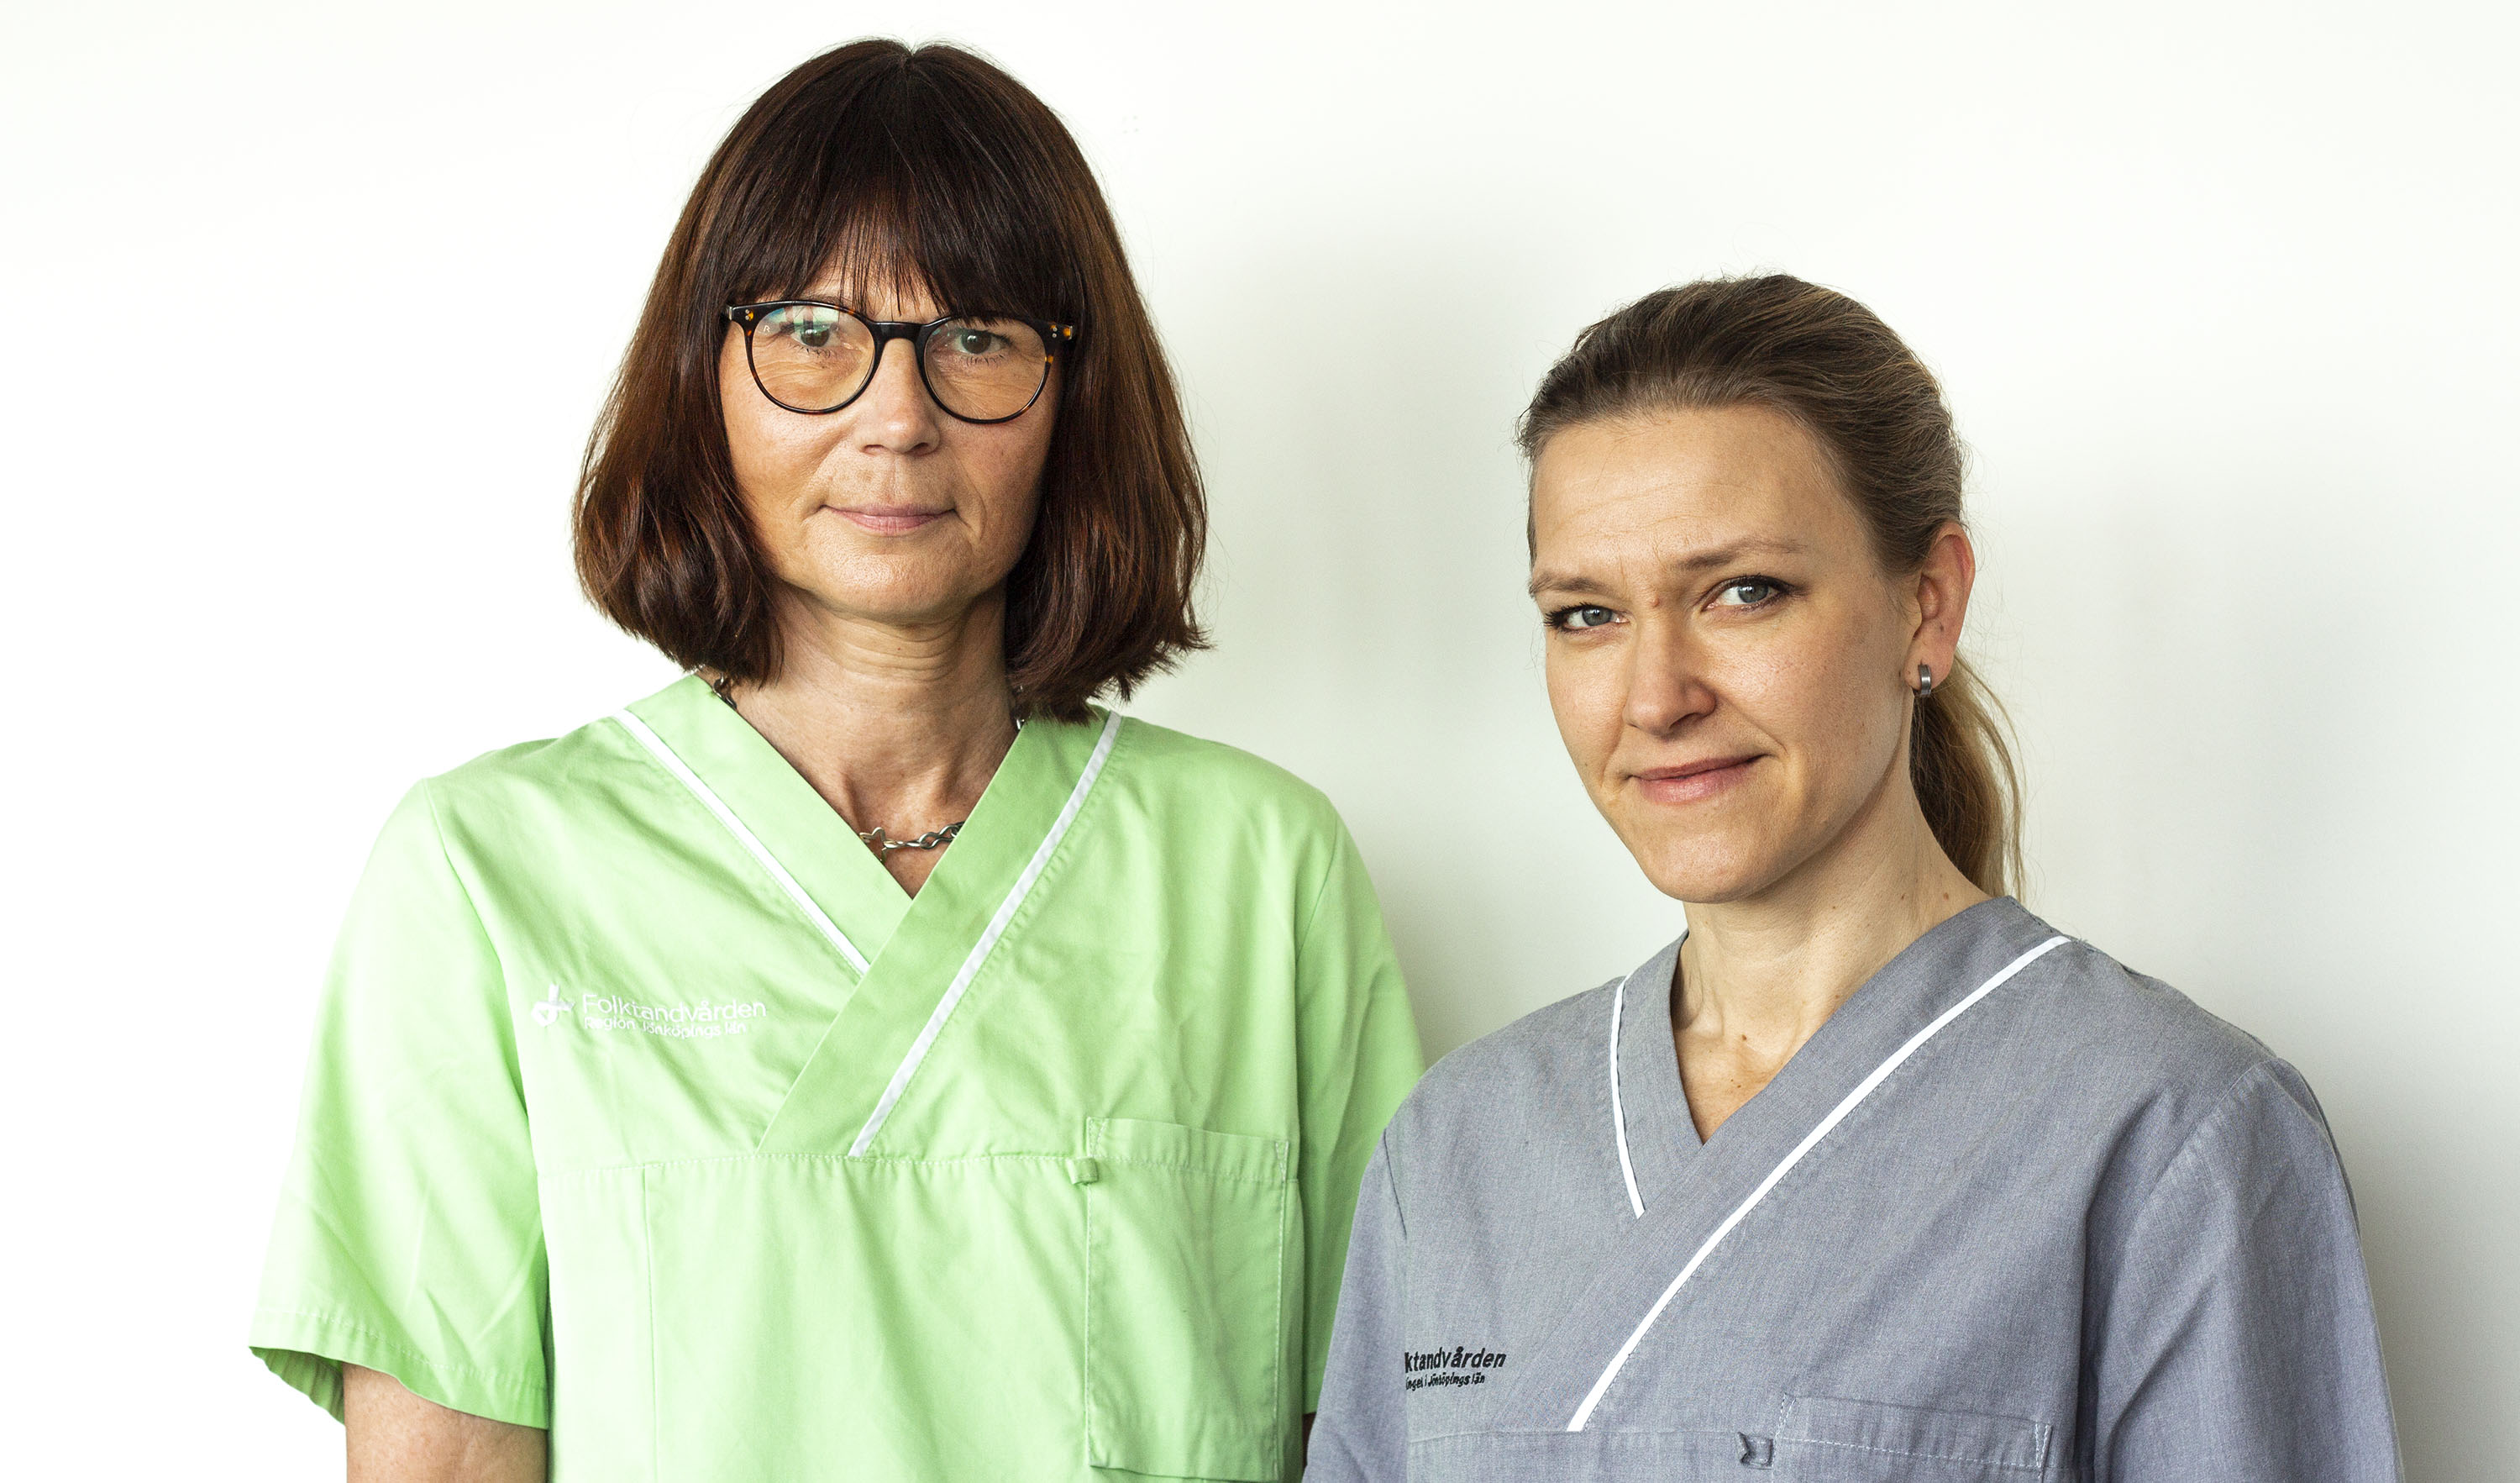 Klinikkordinator Ewa Wallén och klinikchef Karolina Mikkelä Stange